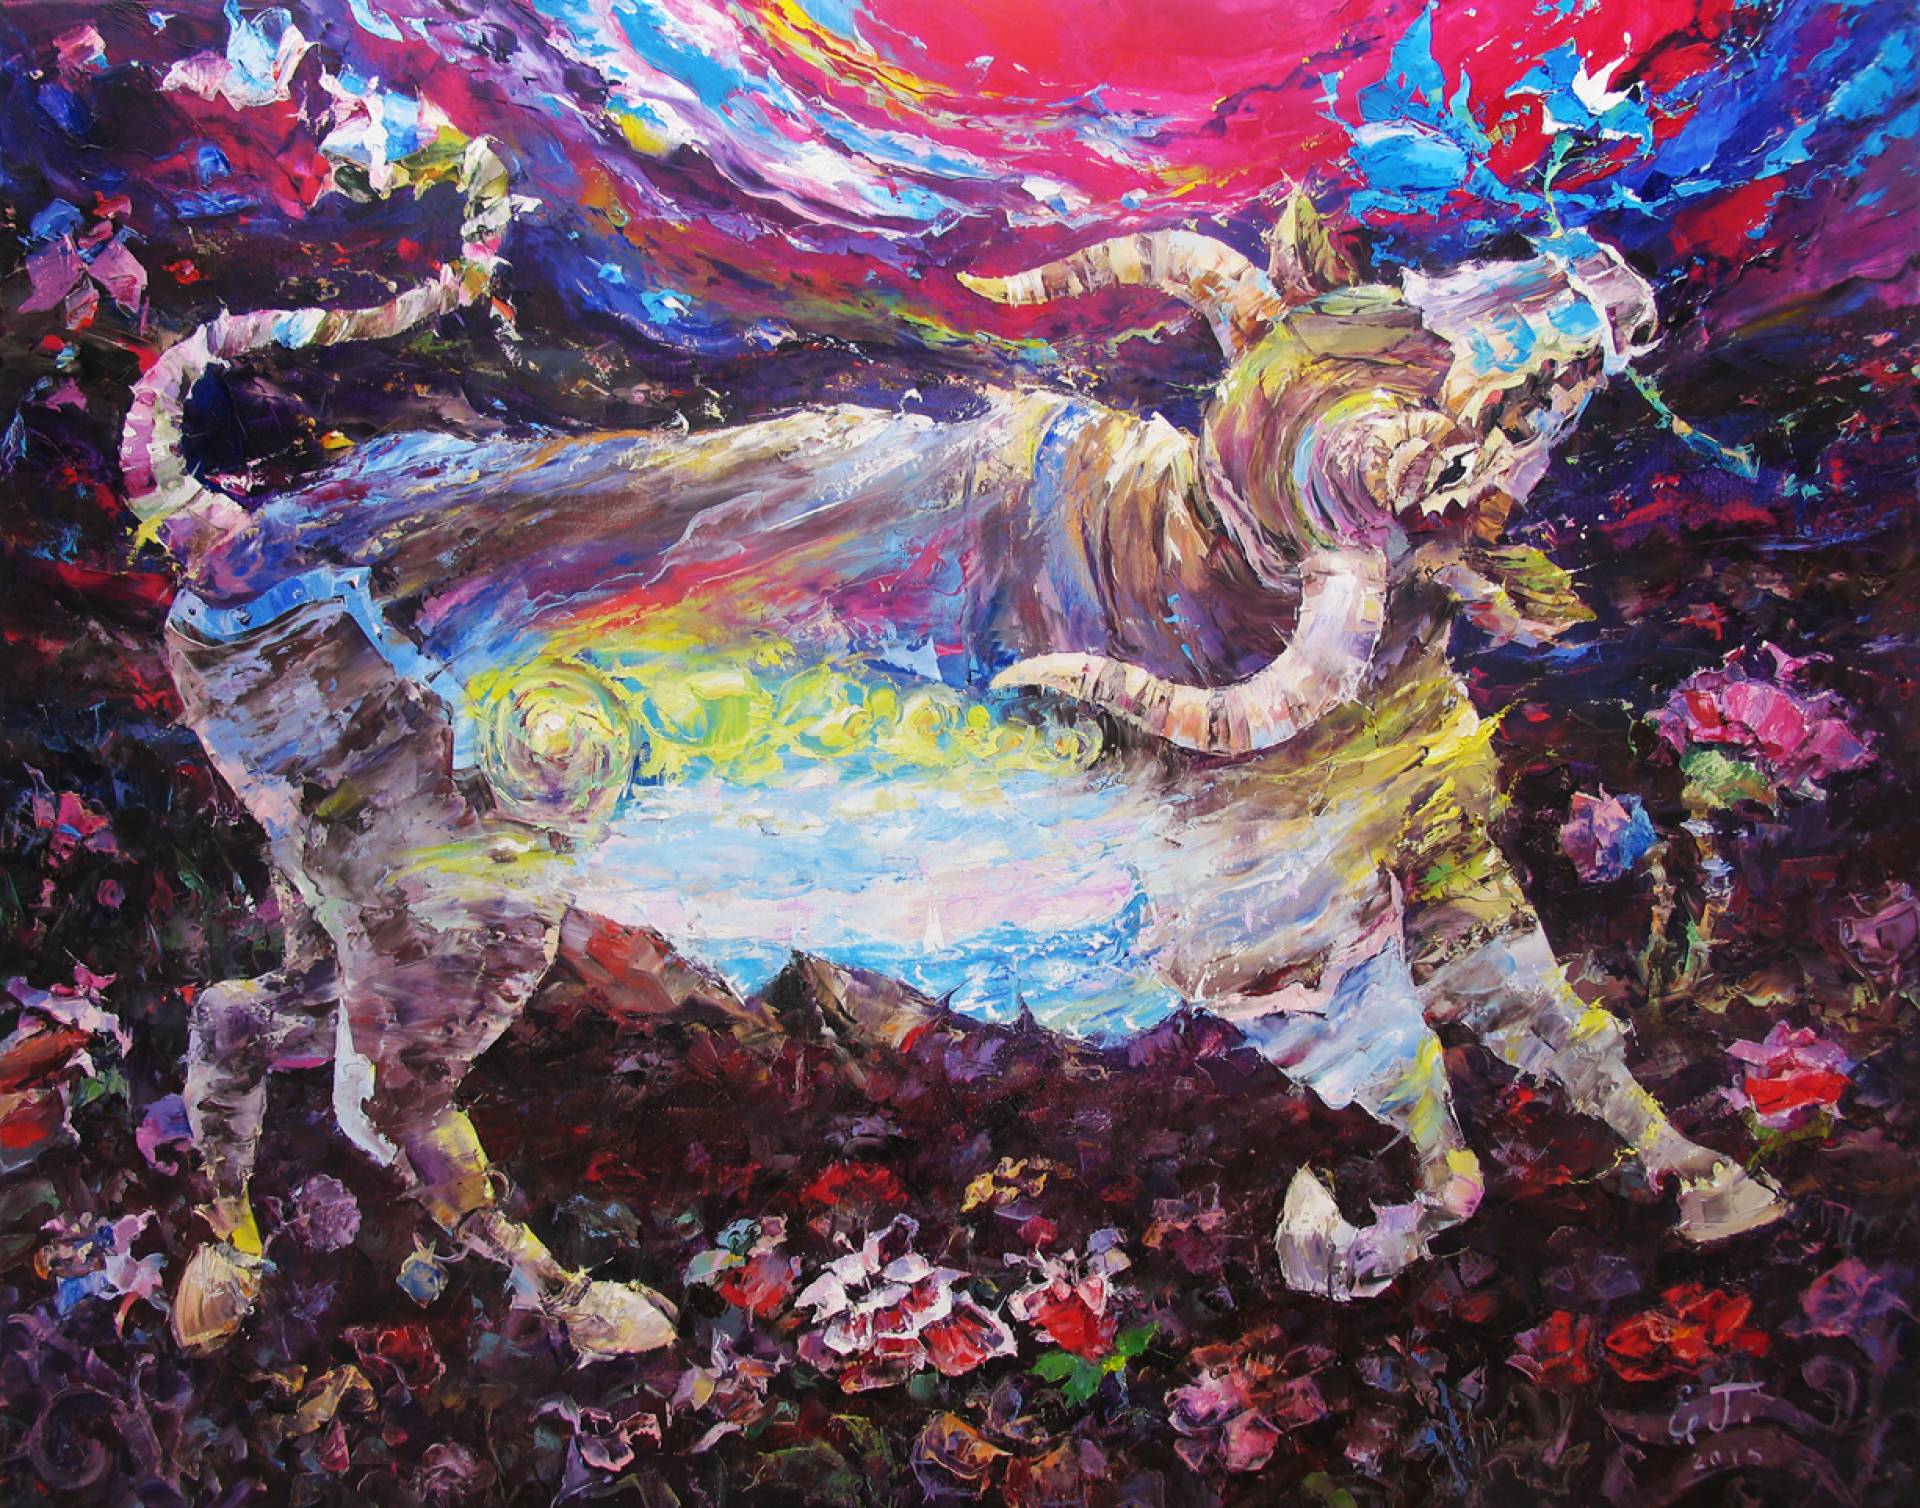 Dancing Bull - 1, Evgeny Guselnikov, Buy the painting Oil